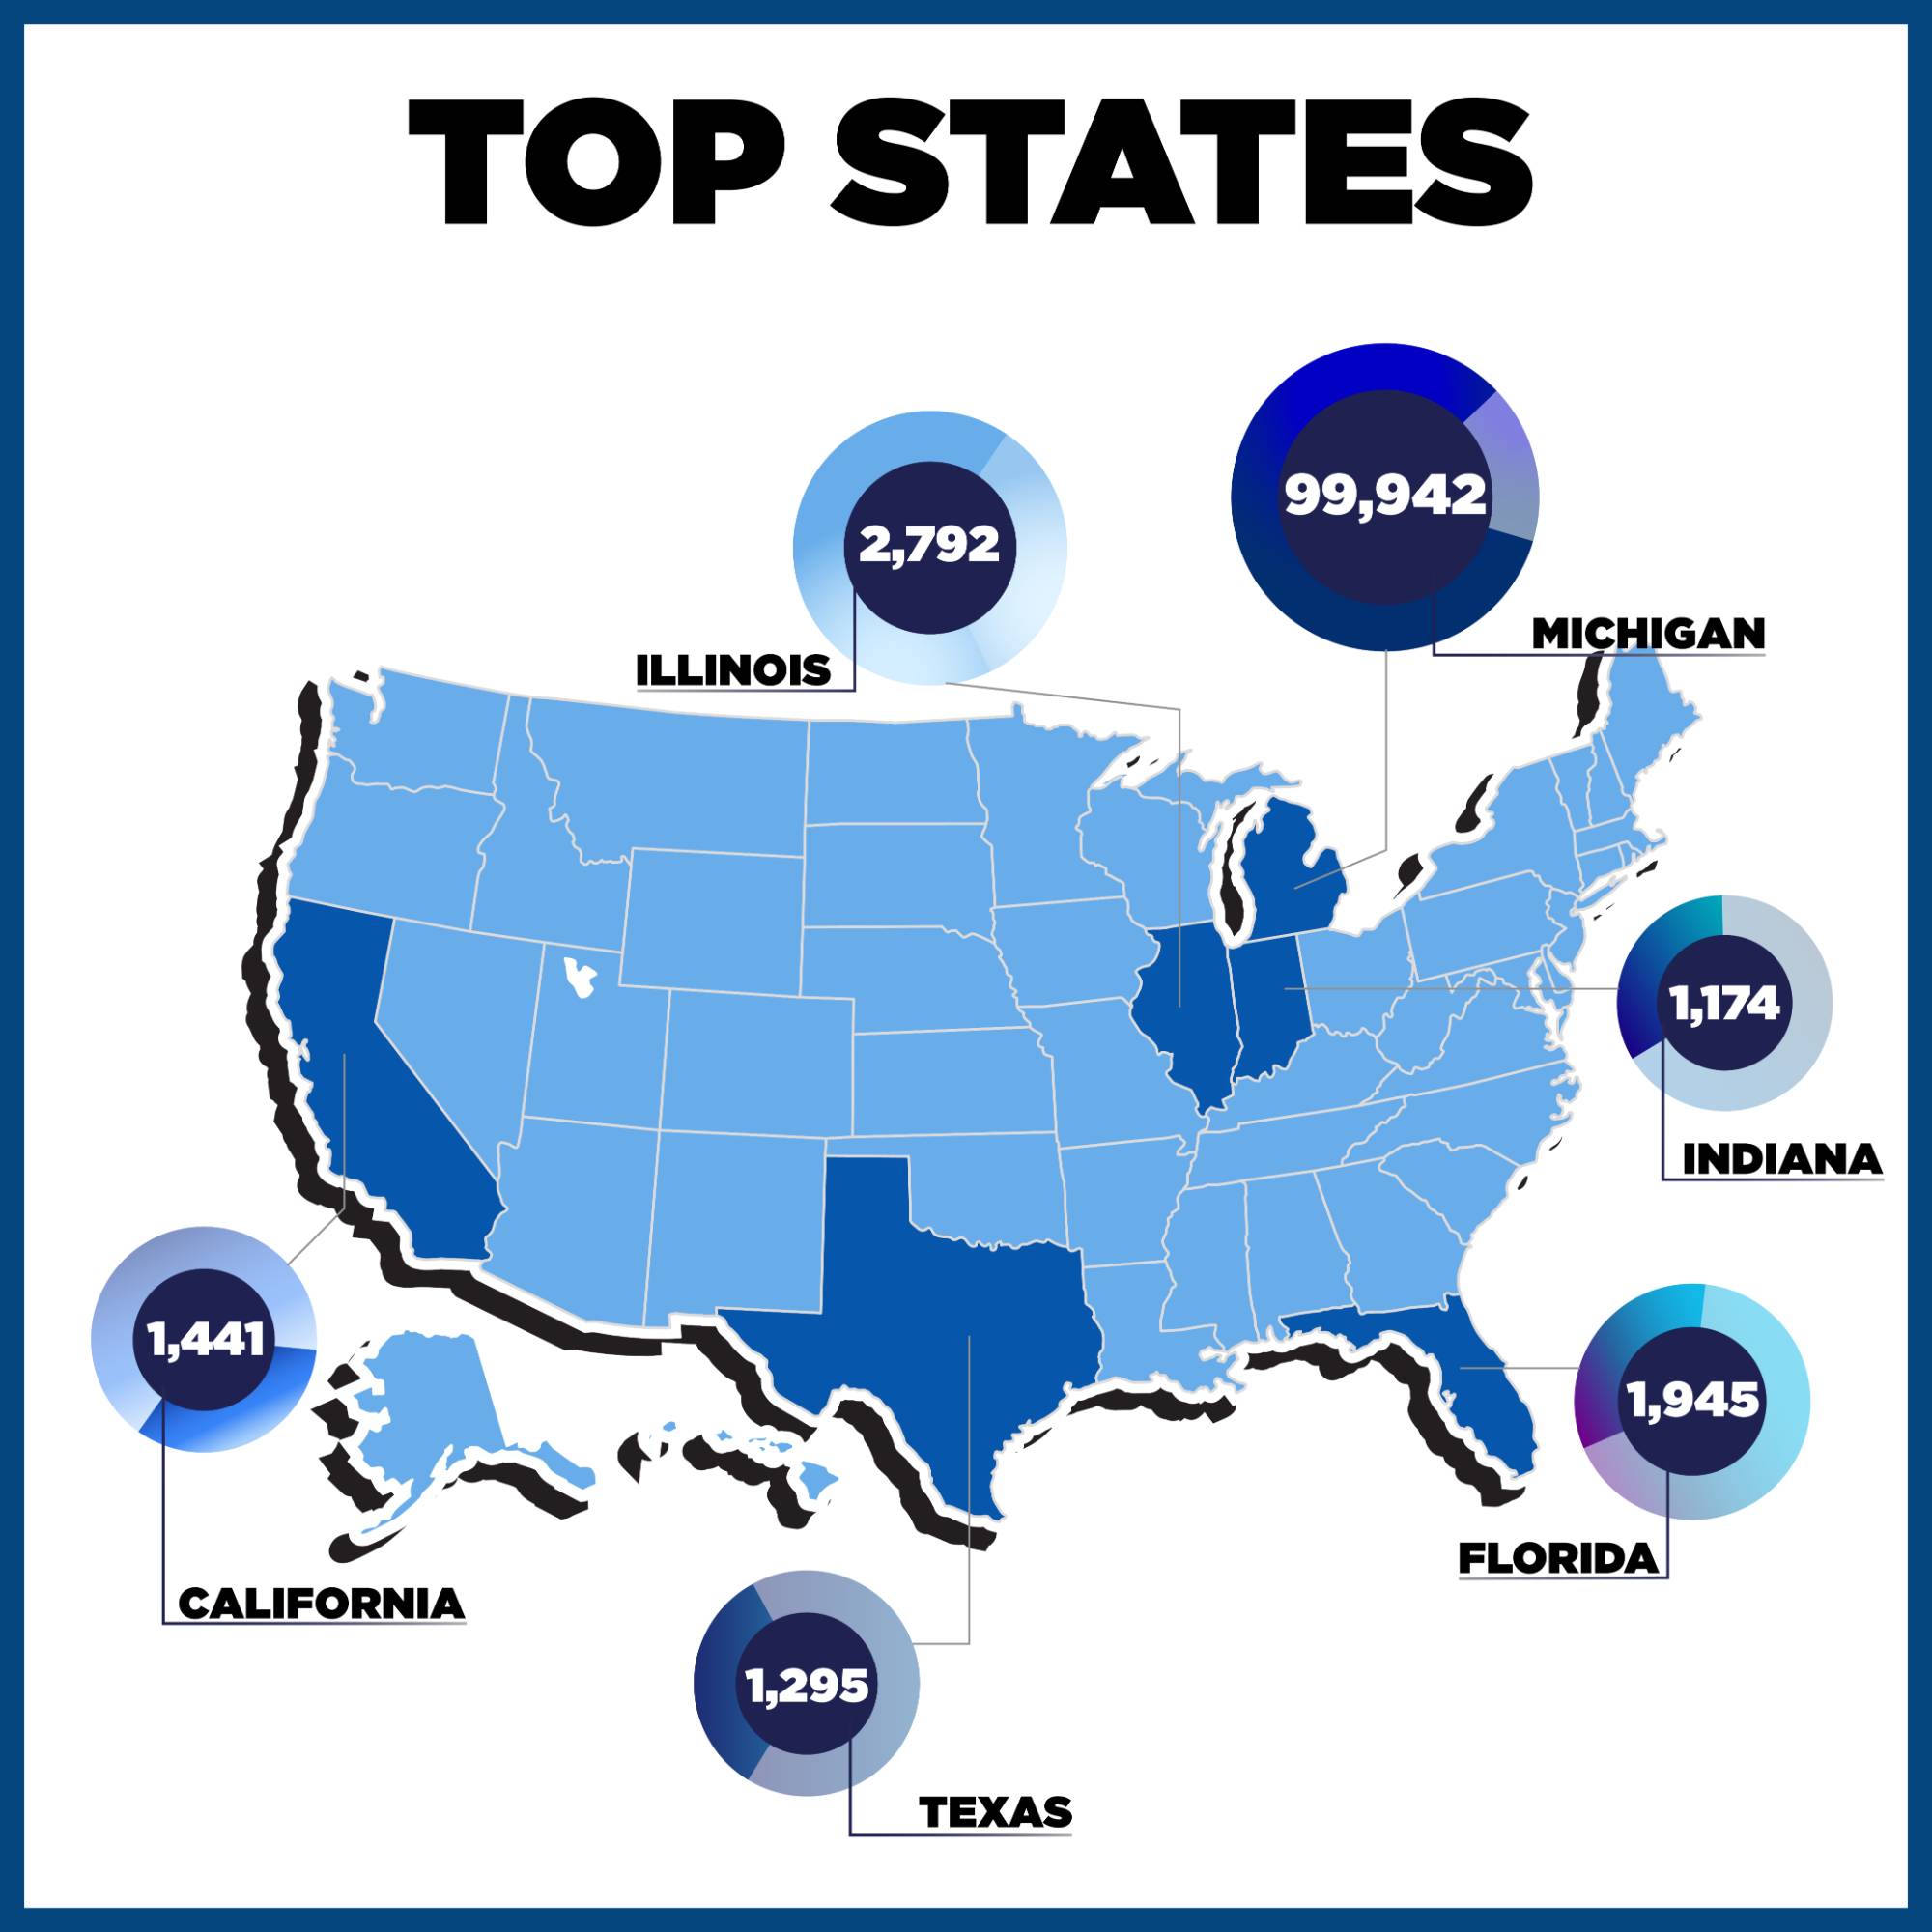 The top 5 states home to GVSU Alumni include: Michigan (99,942), Illinois (2,792), Florida (1,945), California (1,441), Texas (1,295), and Indiana (1,174).